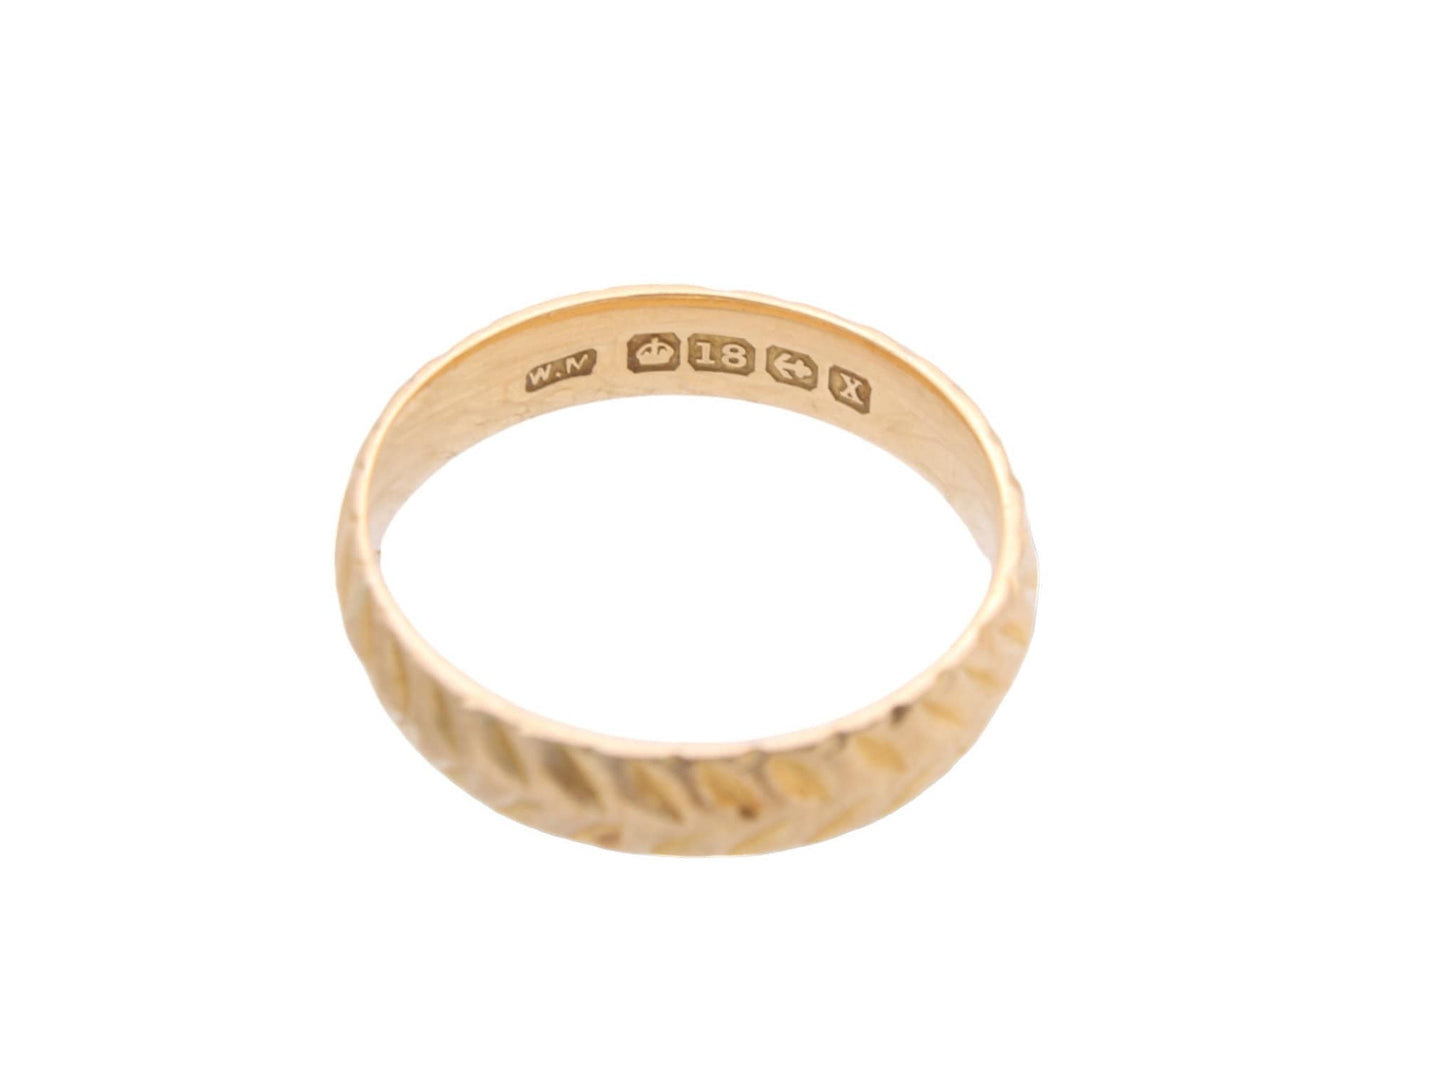 Antique Art Deco 18ct Gold Wedding Ring